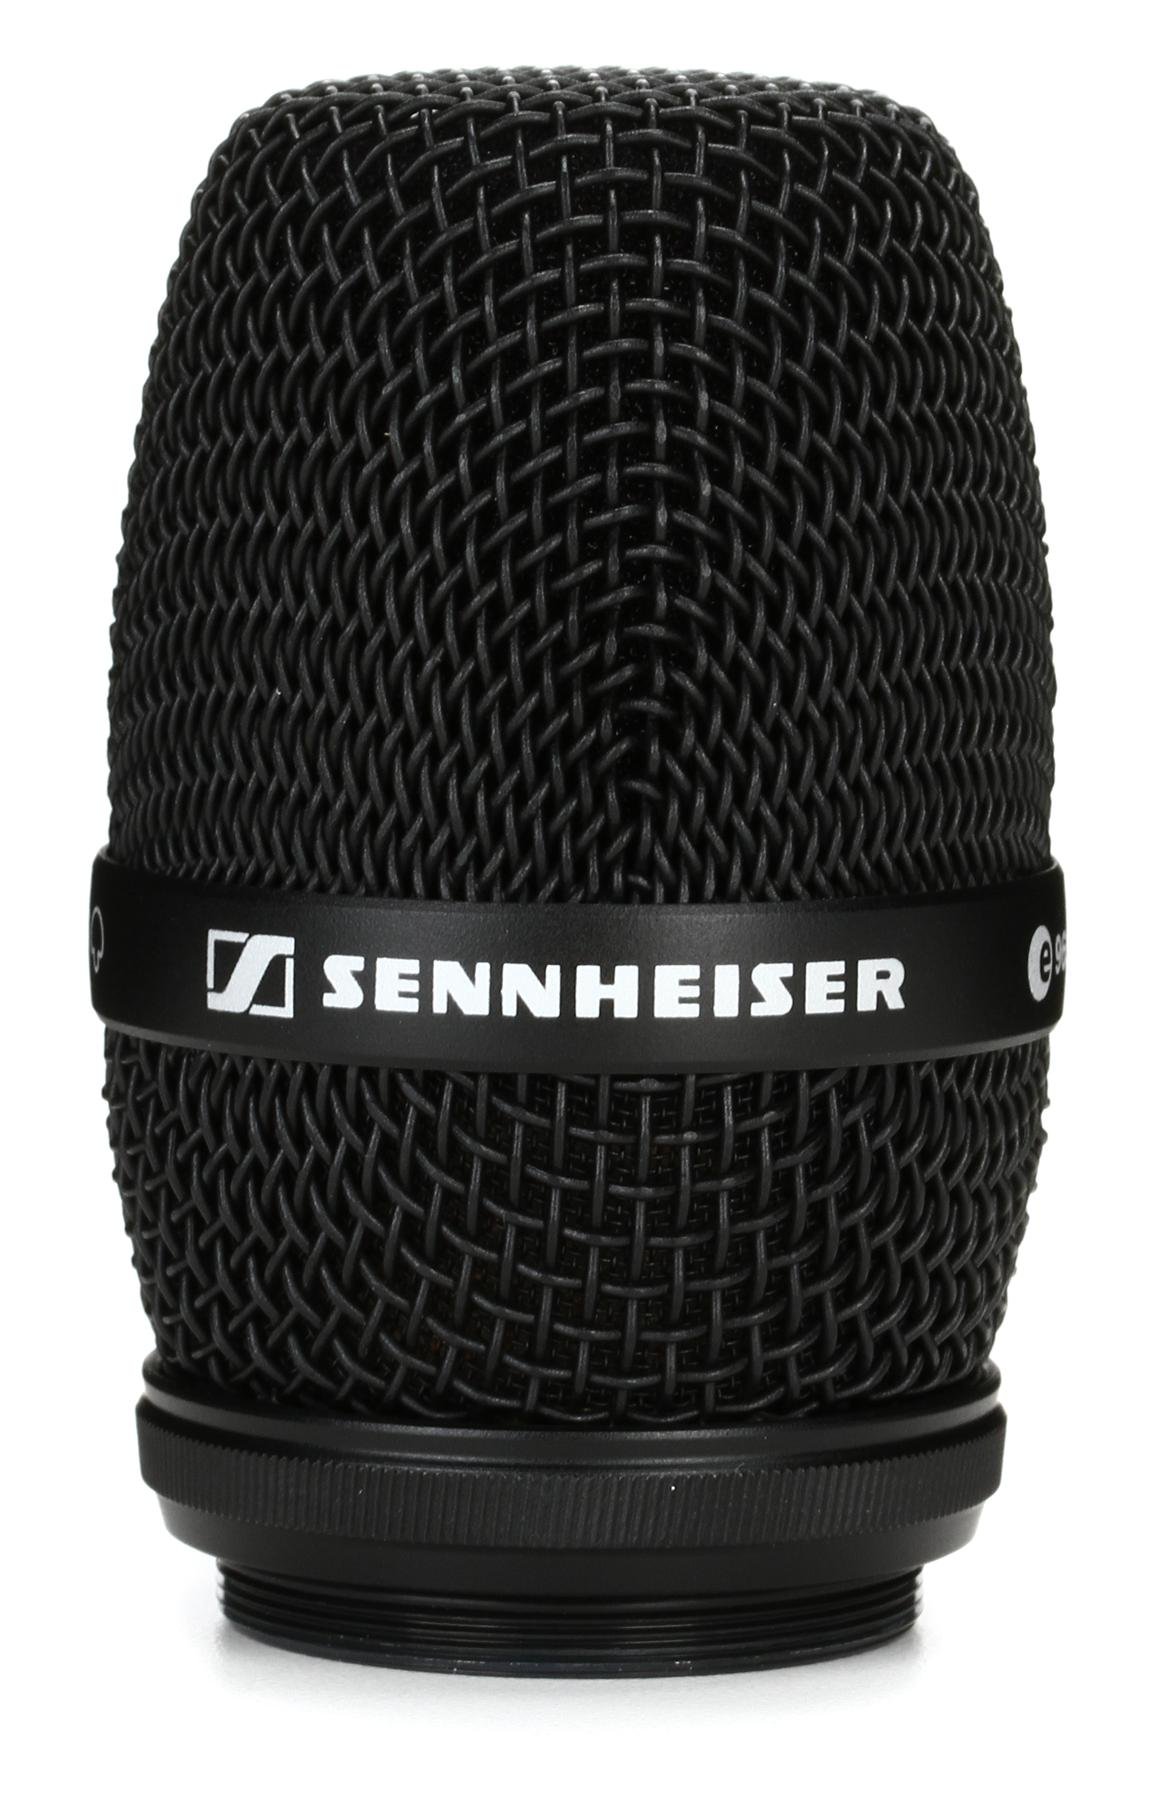 Sennheiser Mmk 965 1 Bk Condenser Microphone Capsule For Wireless Black Sweetwater